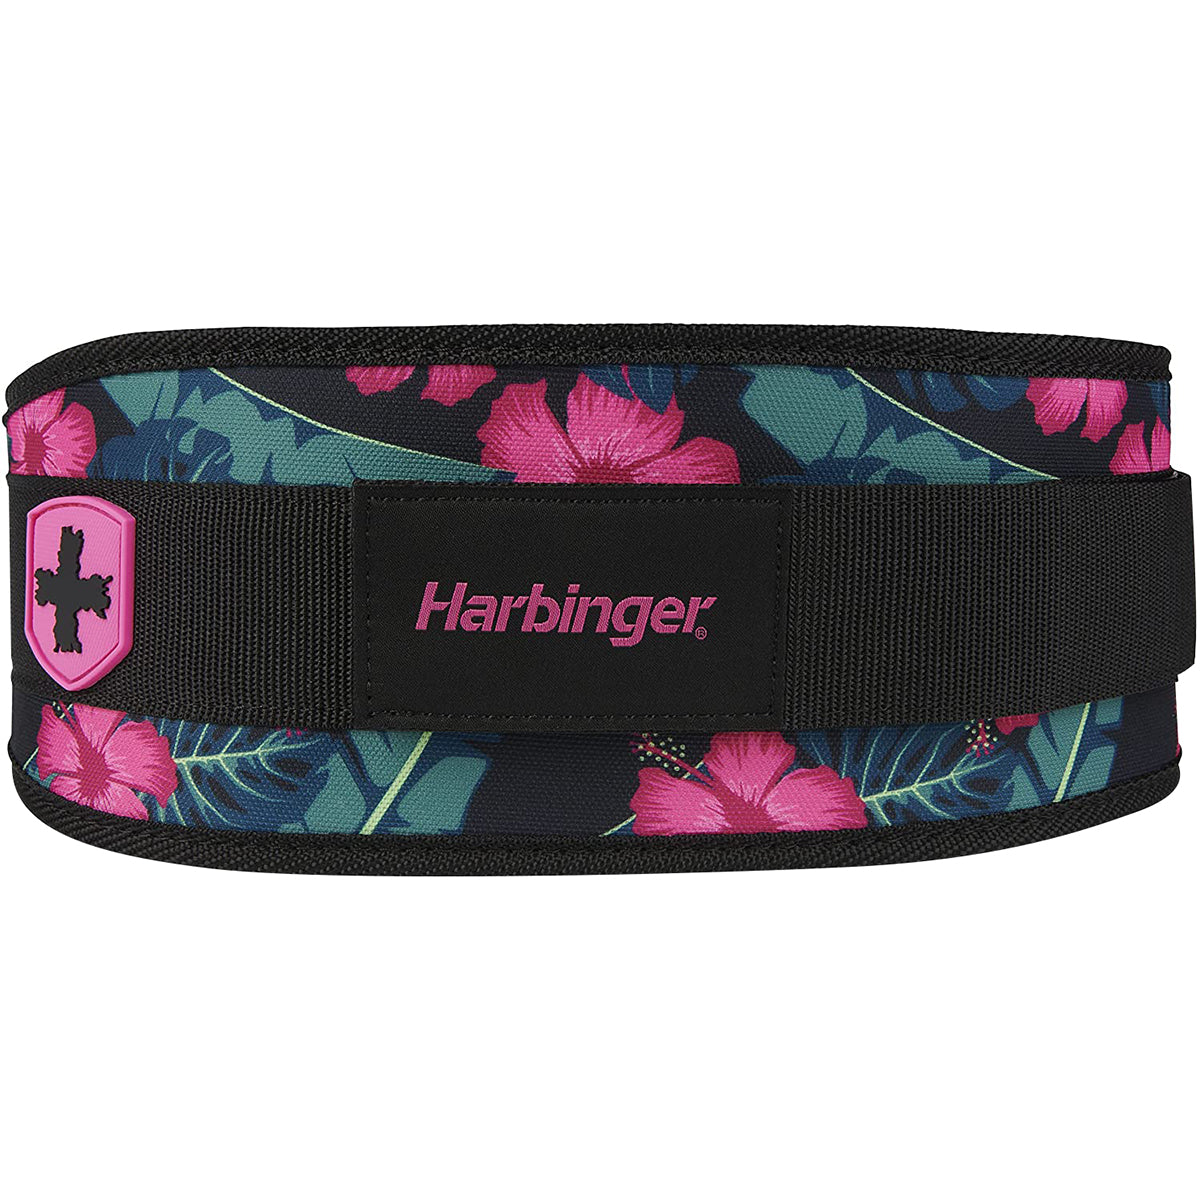 Harbinger 4.5" Unisex Foam Core Weight Lifting Belt - Floral Harbinger